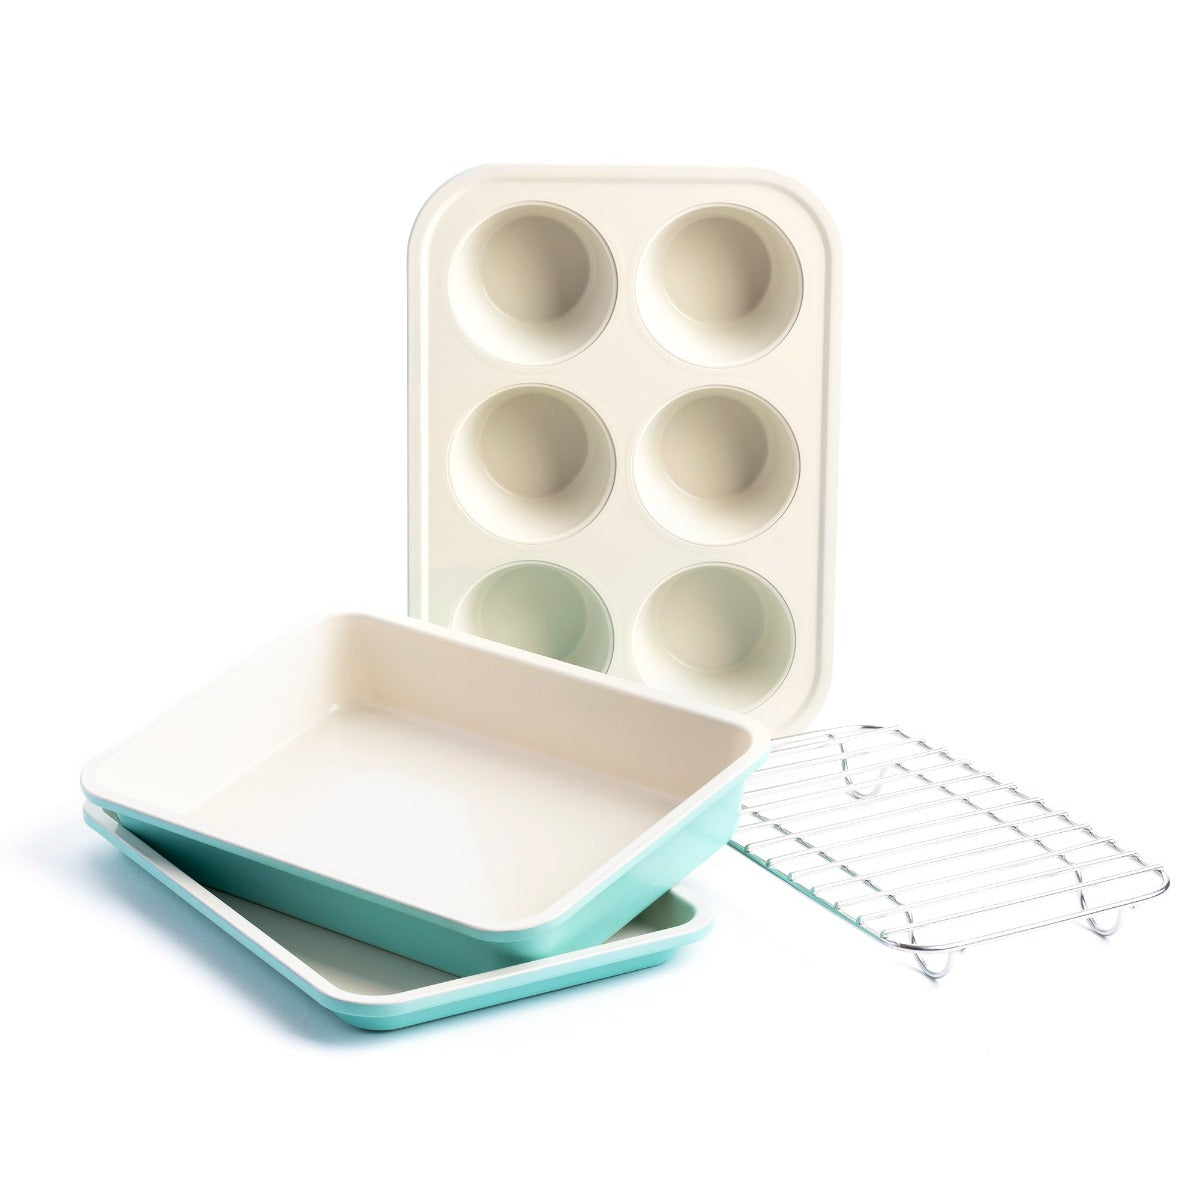 GreenLife Ceramic Nonstick 4-Piece Bakeware Set | Turquoise